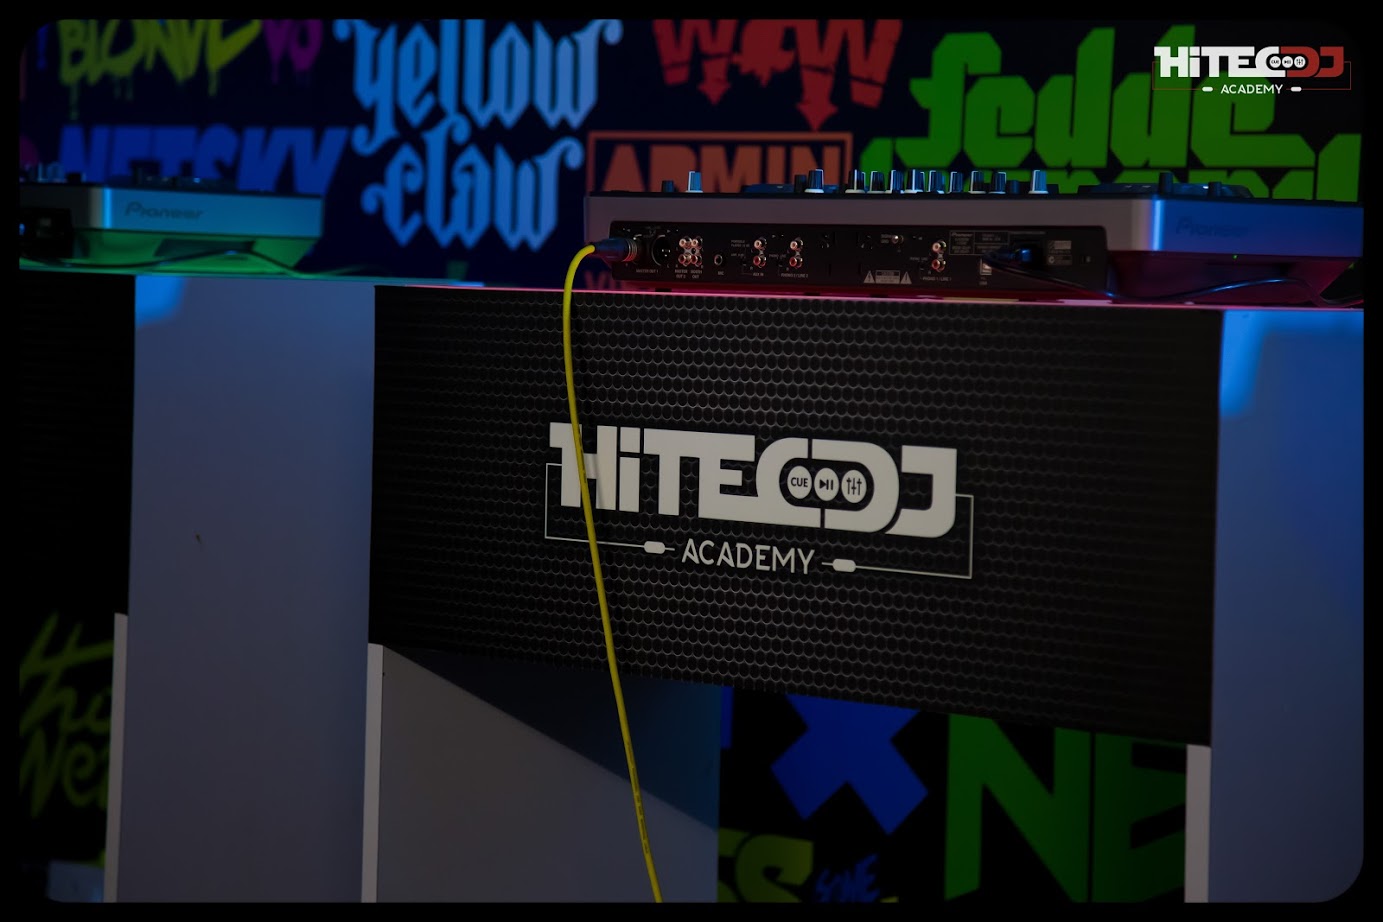 HitecDJ Academy